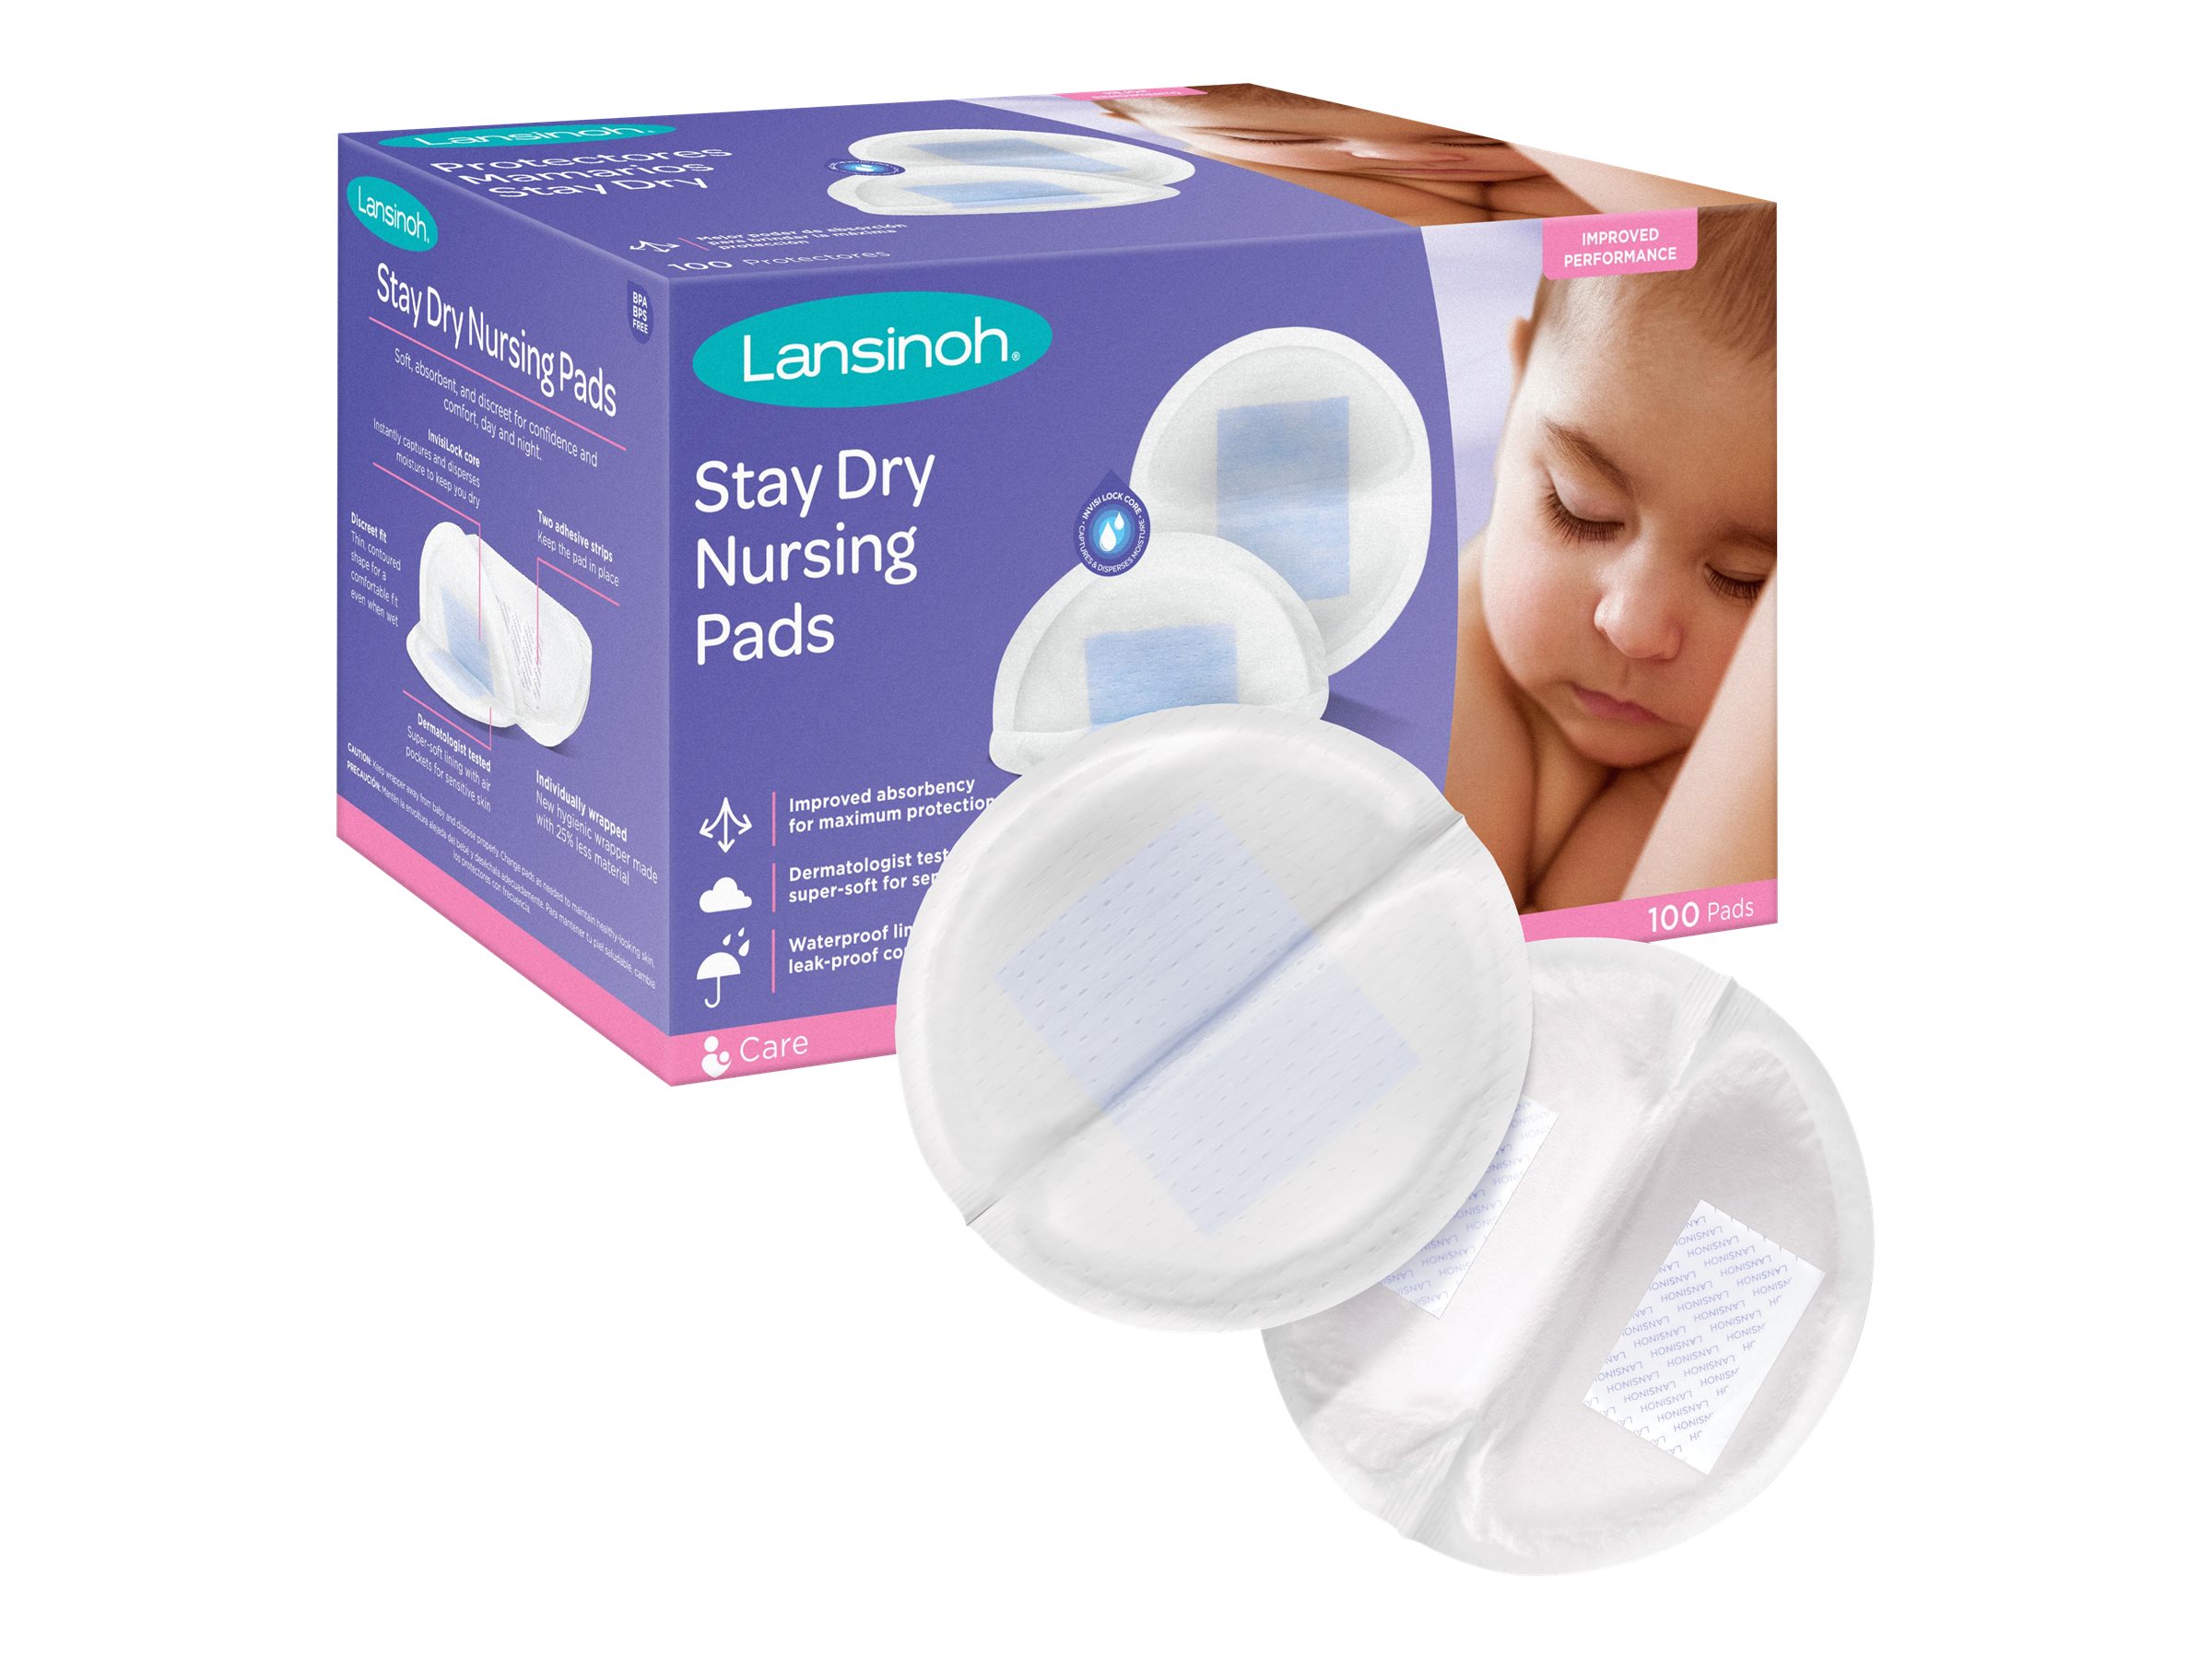 Lansinoh Disposable Nursing Breast Pads 60pads per box Bundle